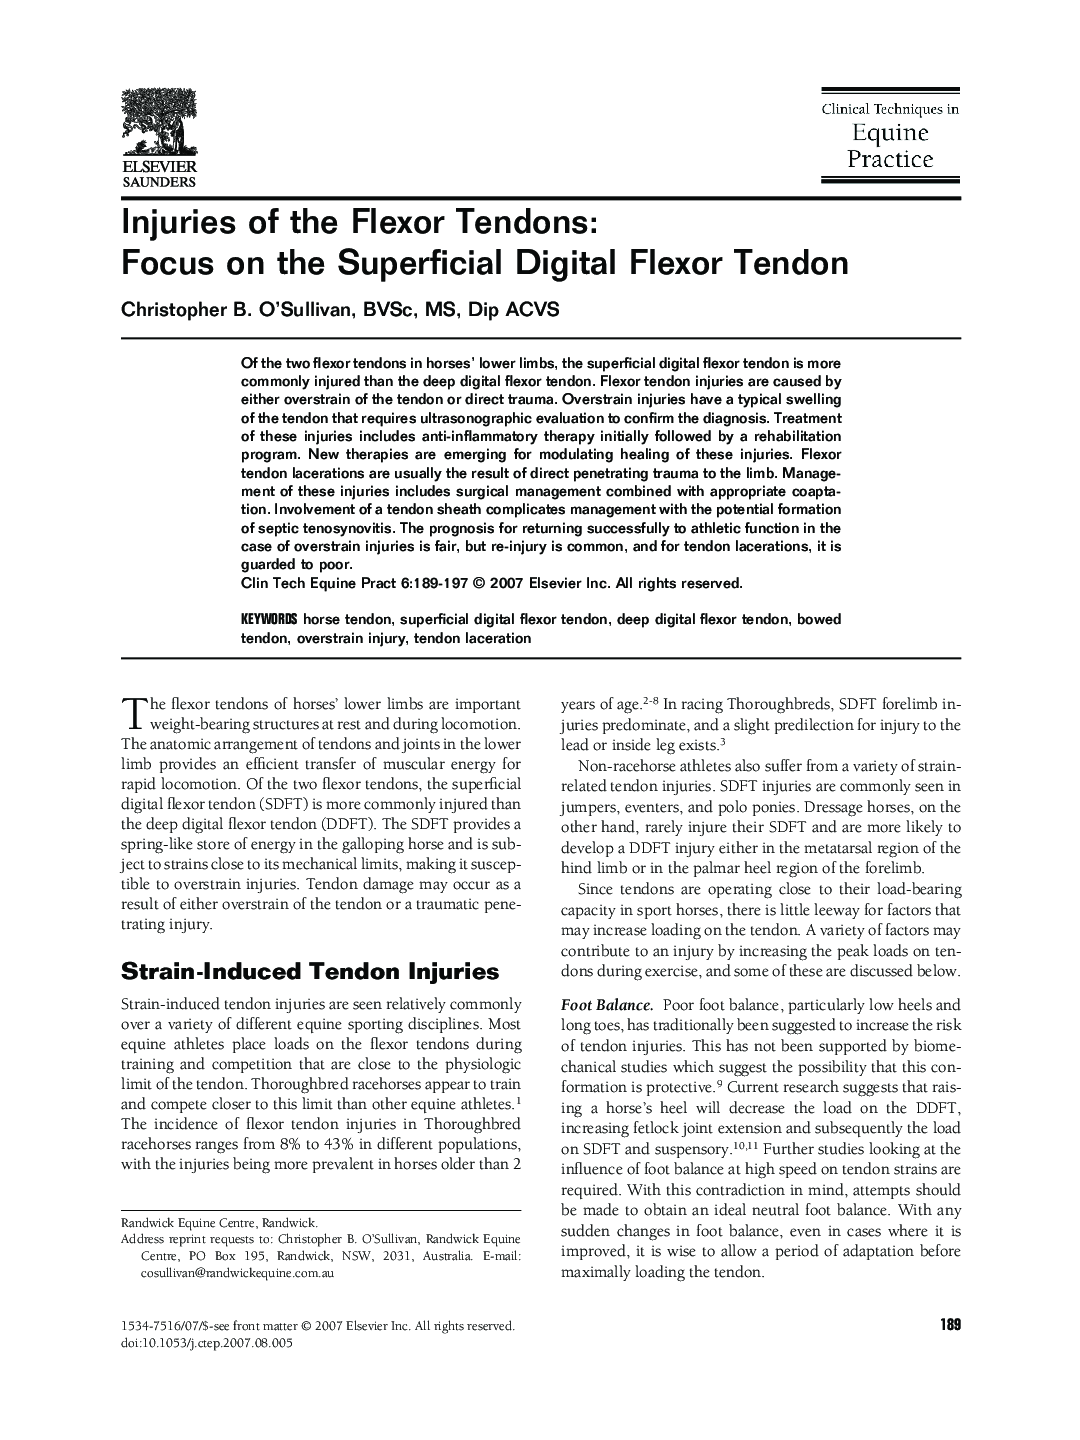 Injuries of the Flexor Tendons: Focus on the Superficial Digital Flexor Tendon